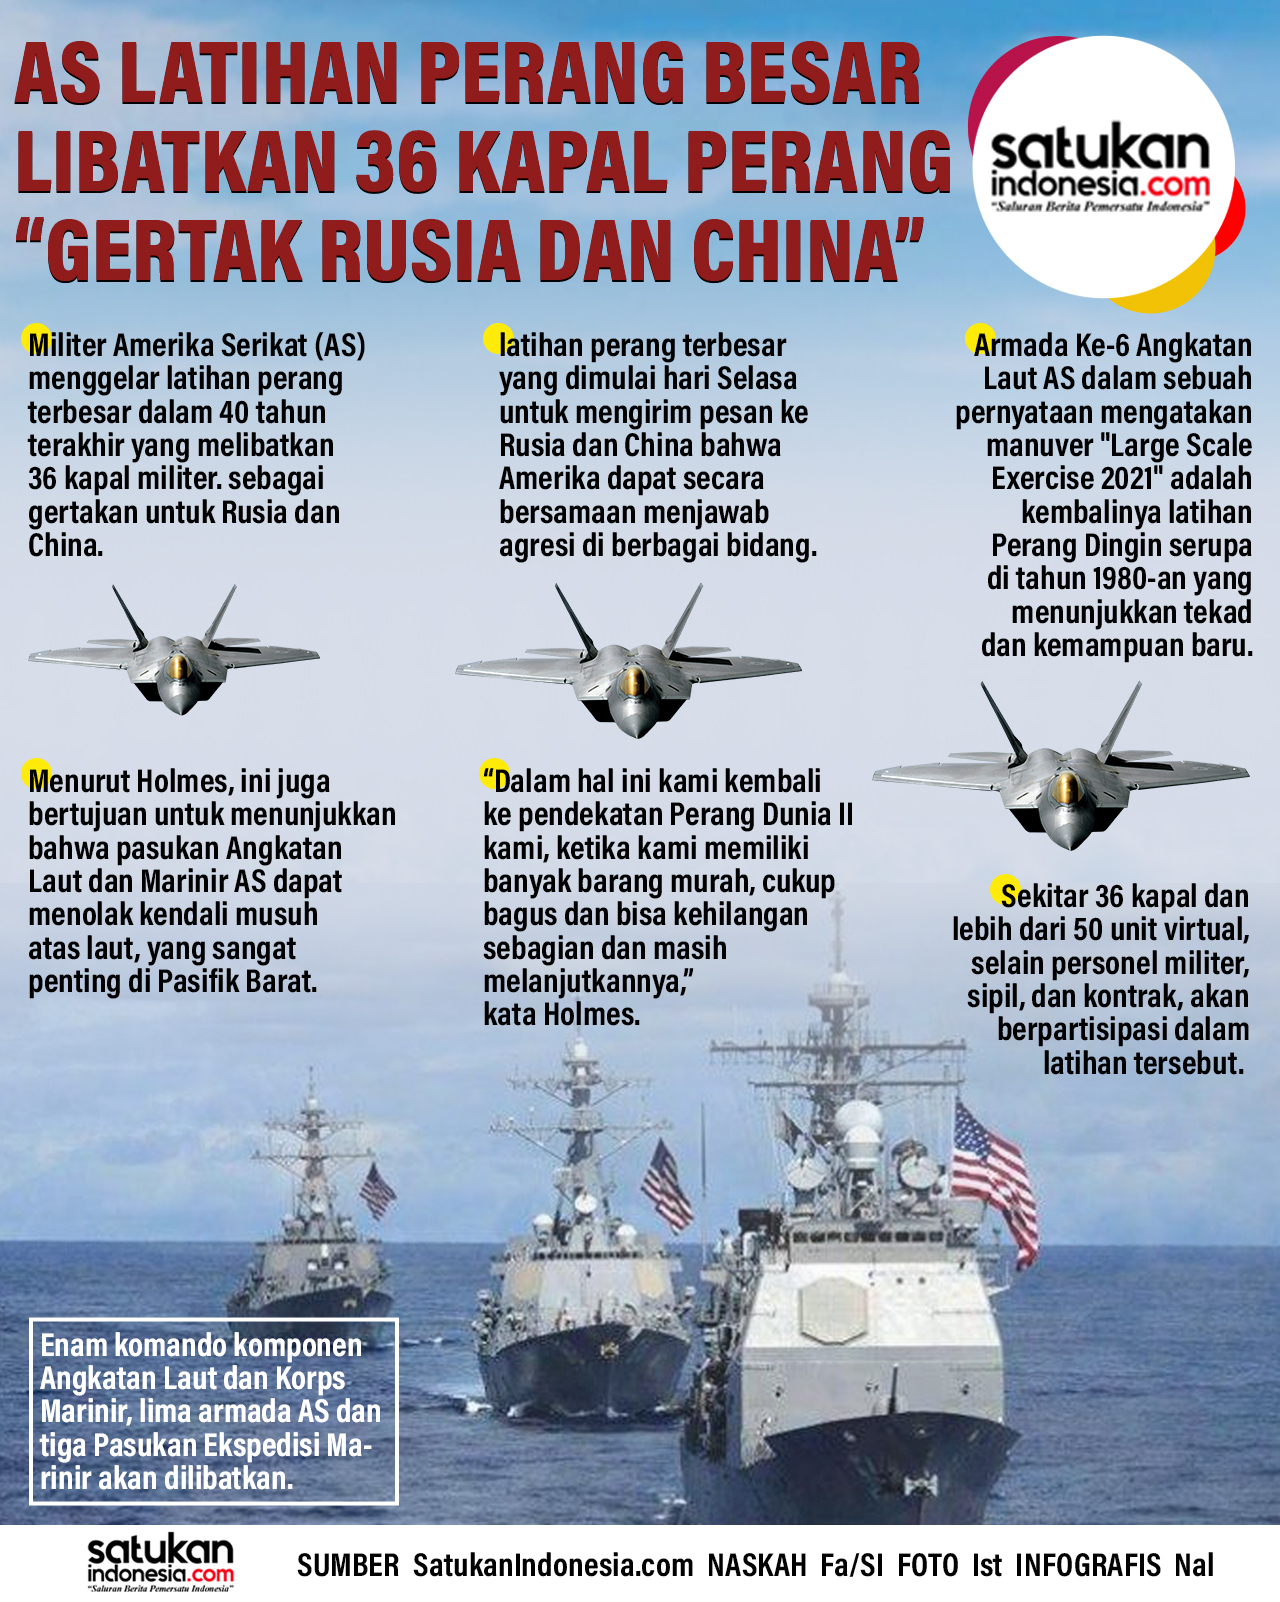 Gertak Rusia Dan China As Libatkan 36 Kapal Perang Dalam Latihan Perang Terbesar Satukanindonesia Com